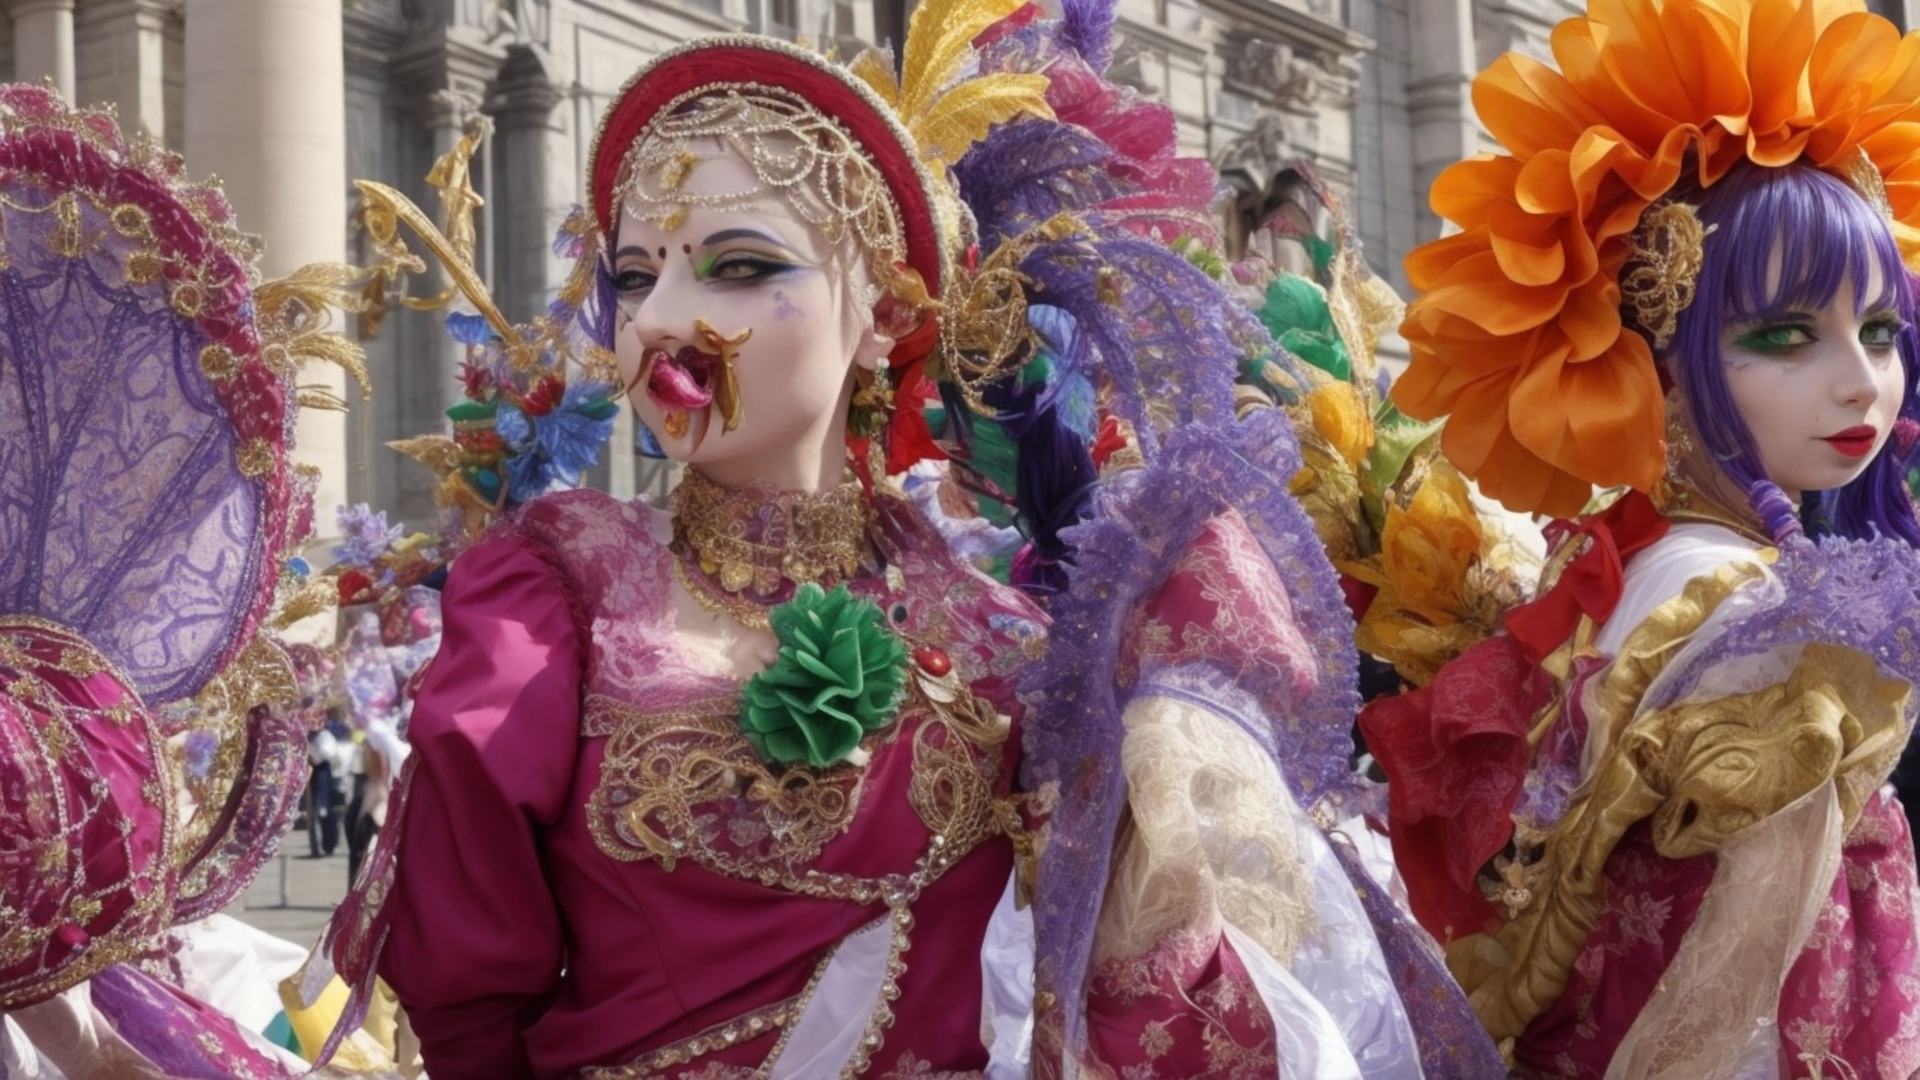 Carnevale: Una Festa Goliardica tra Risate e Maschere Scatenate